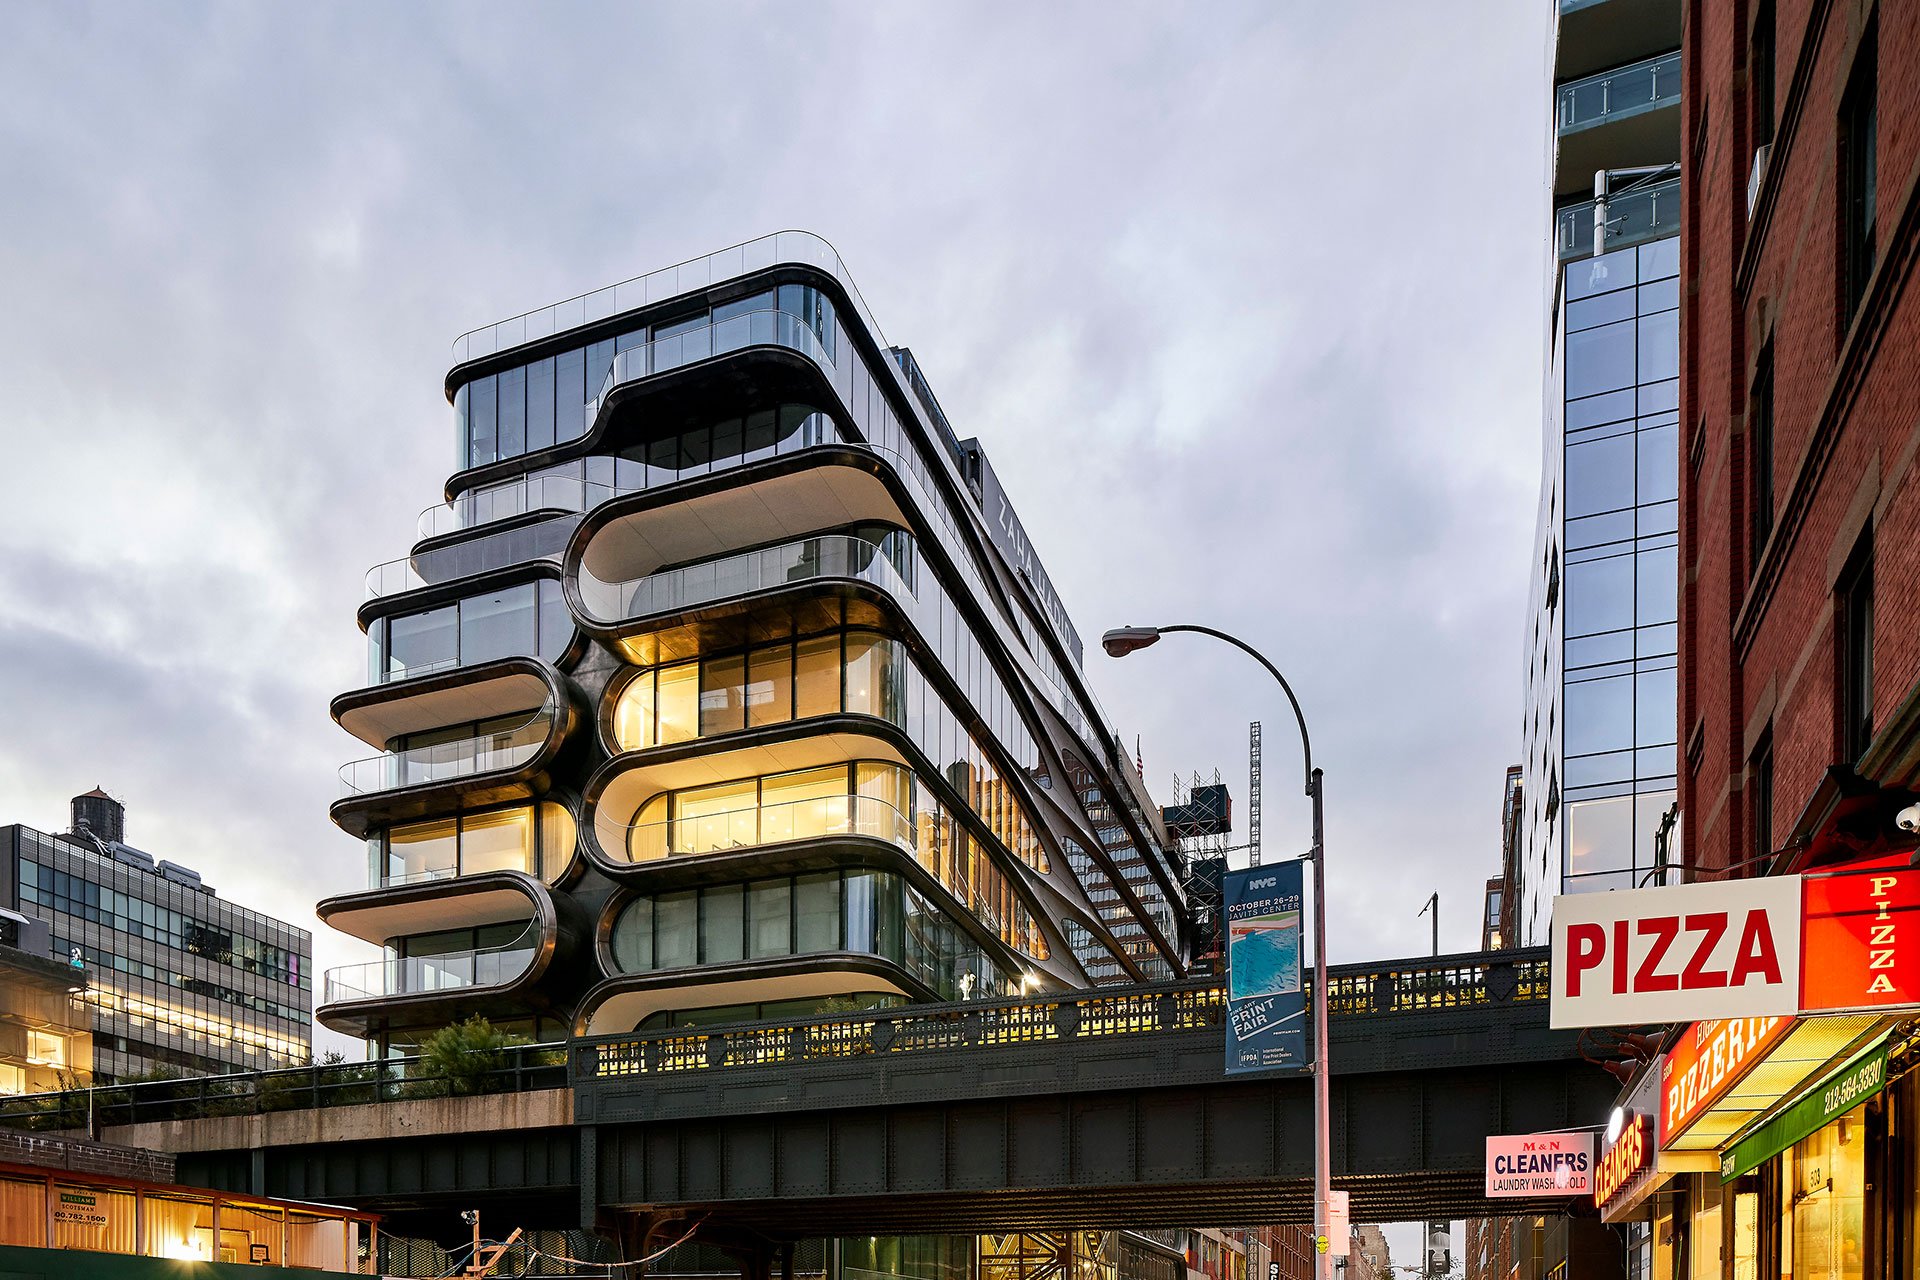 520 West 28th Street New York, New York / USA Architects: Zaha Hadid Developer: Related